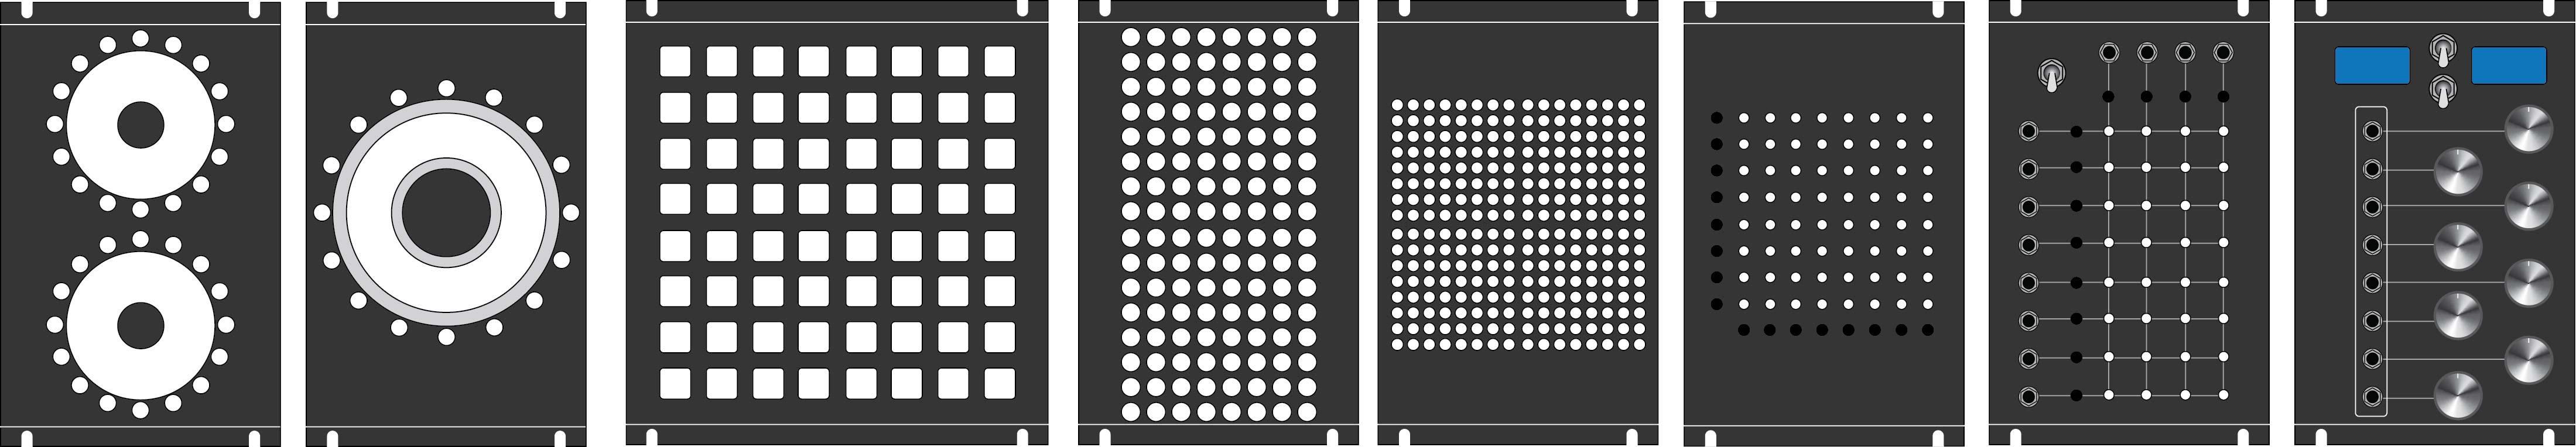 undefined:neonking:modulbox-panels2.jpg